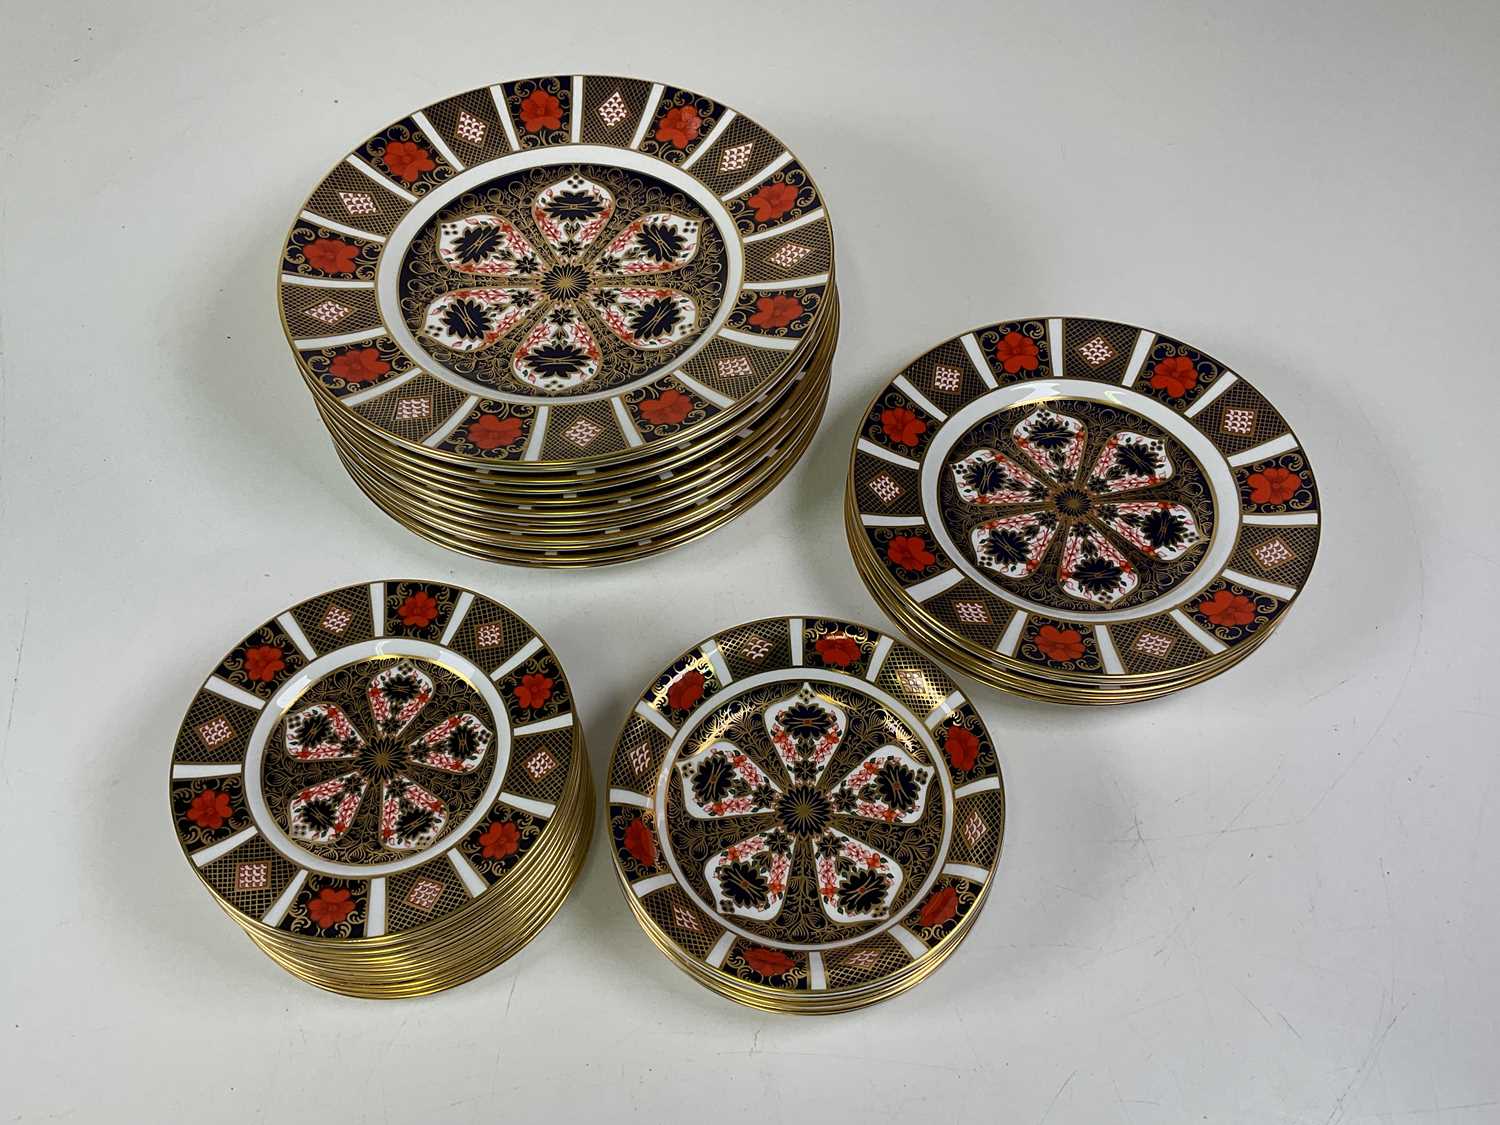 Royal Crown Derby quantity of plates and bowls comprising twelve plates, diameter 27cm; six